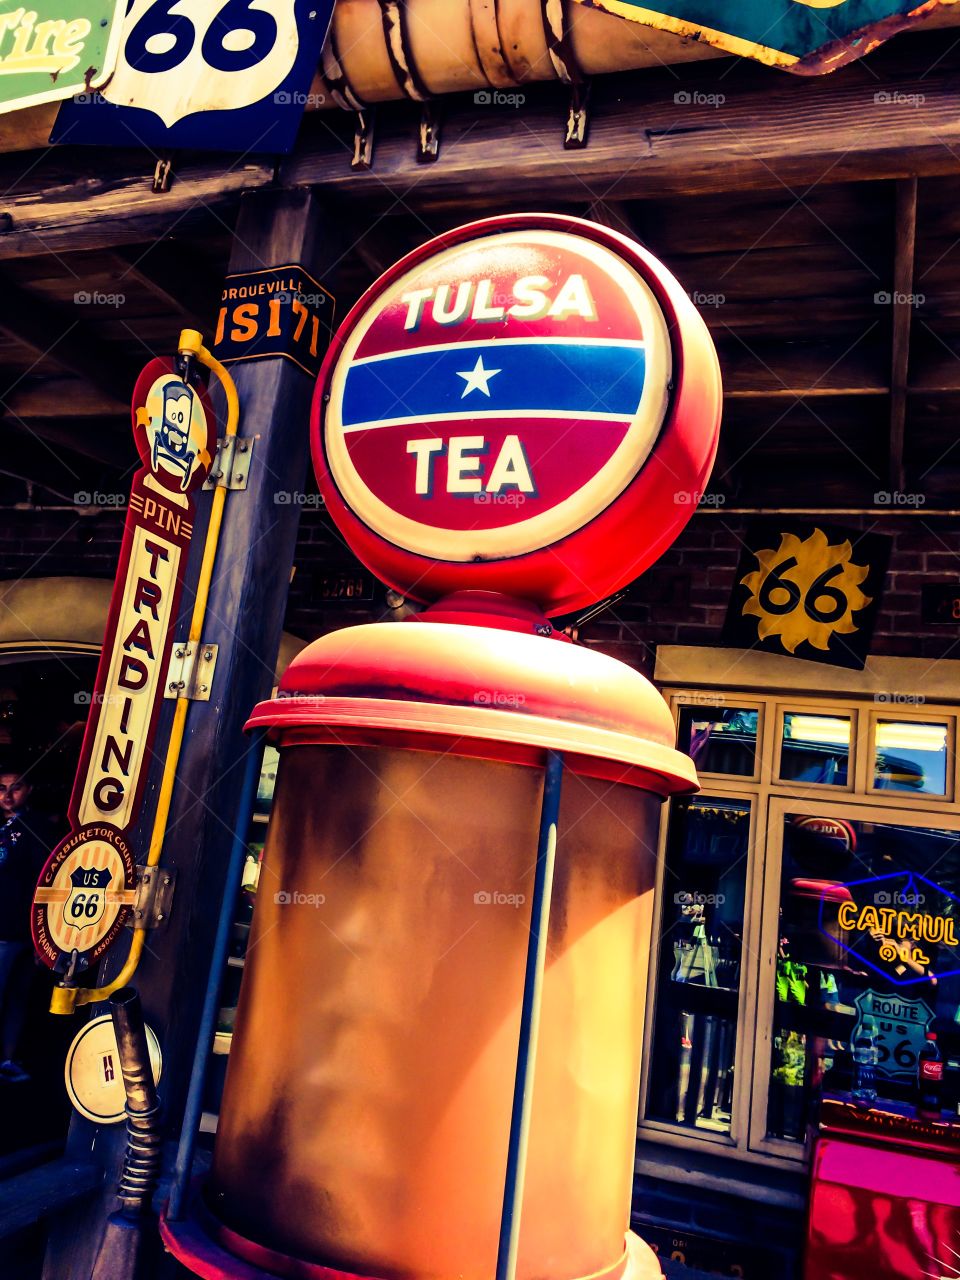 Texas Tea brand of gasoline sold exclusively in radiator springs at Disney's California adventure in Anaheim California. 